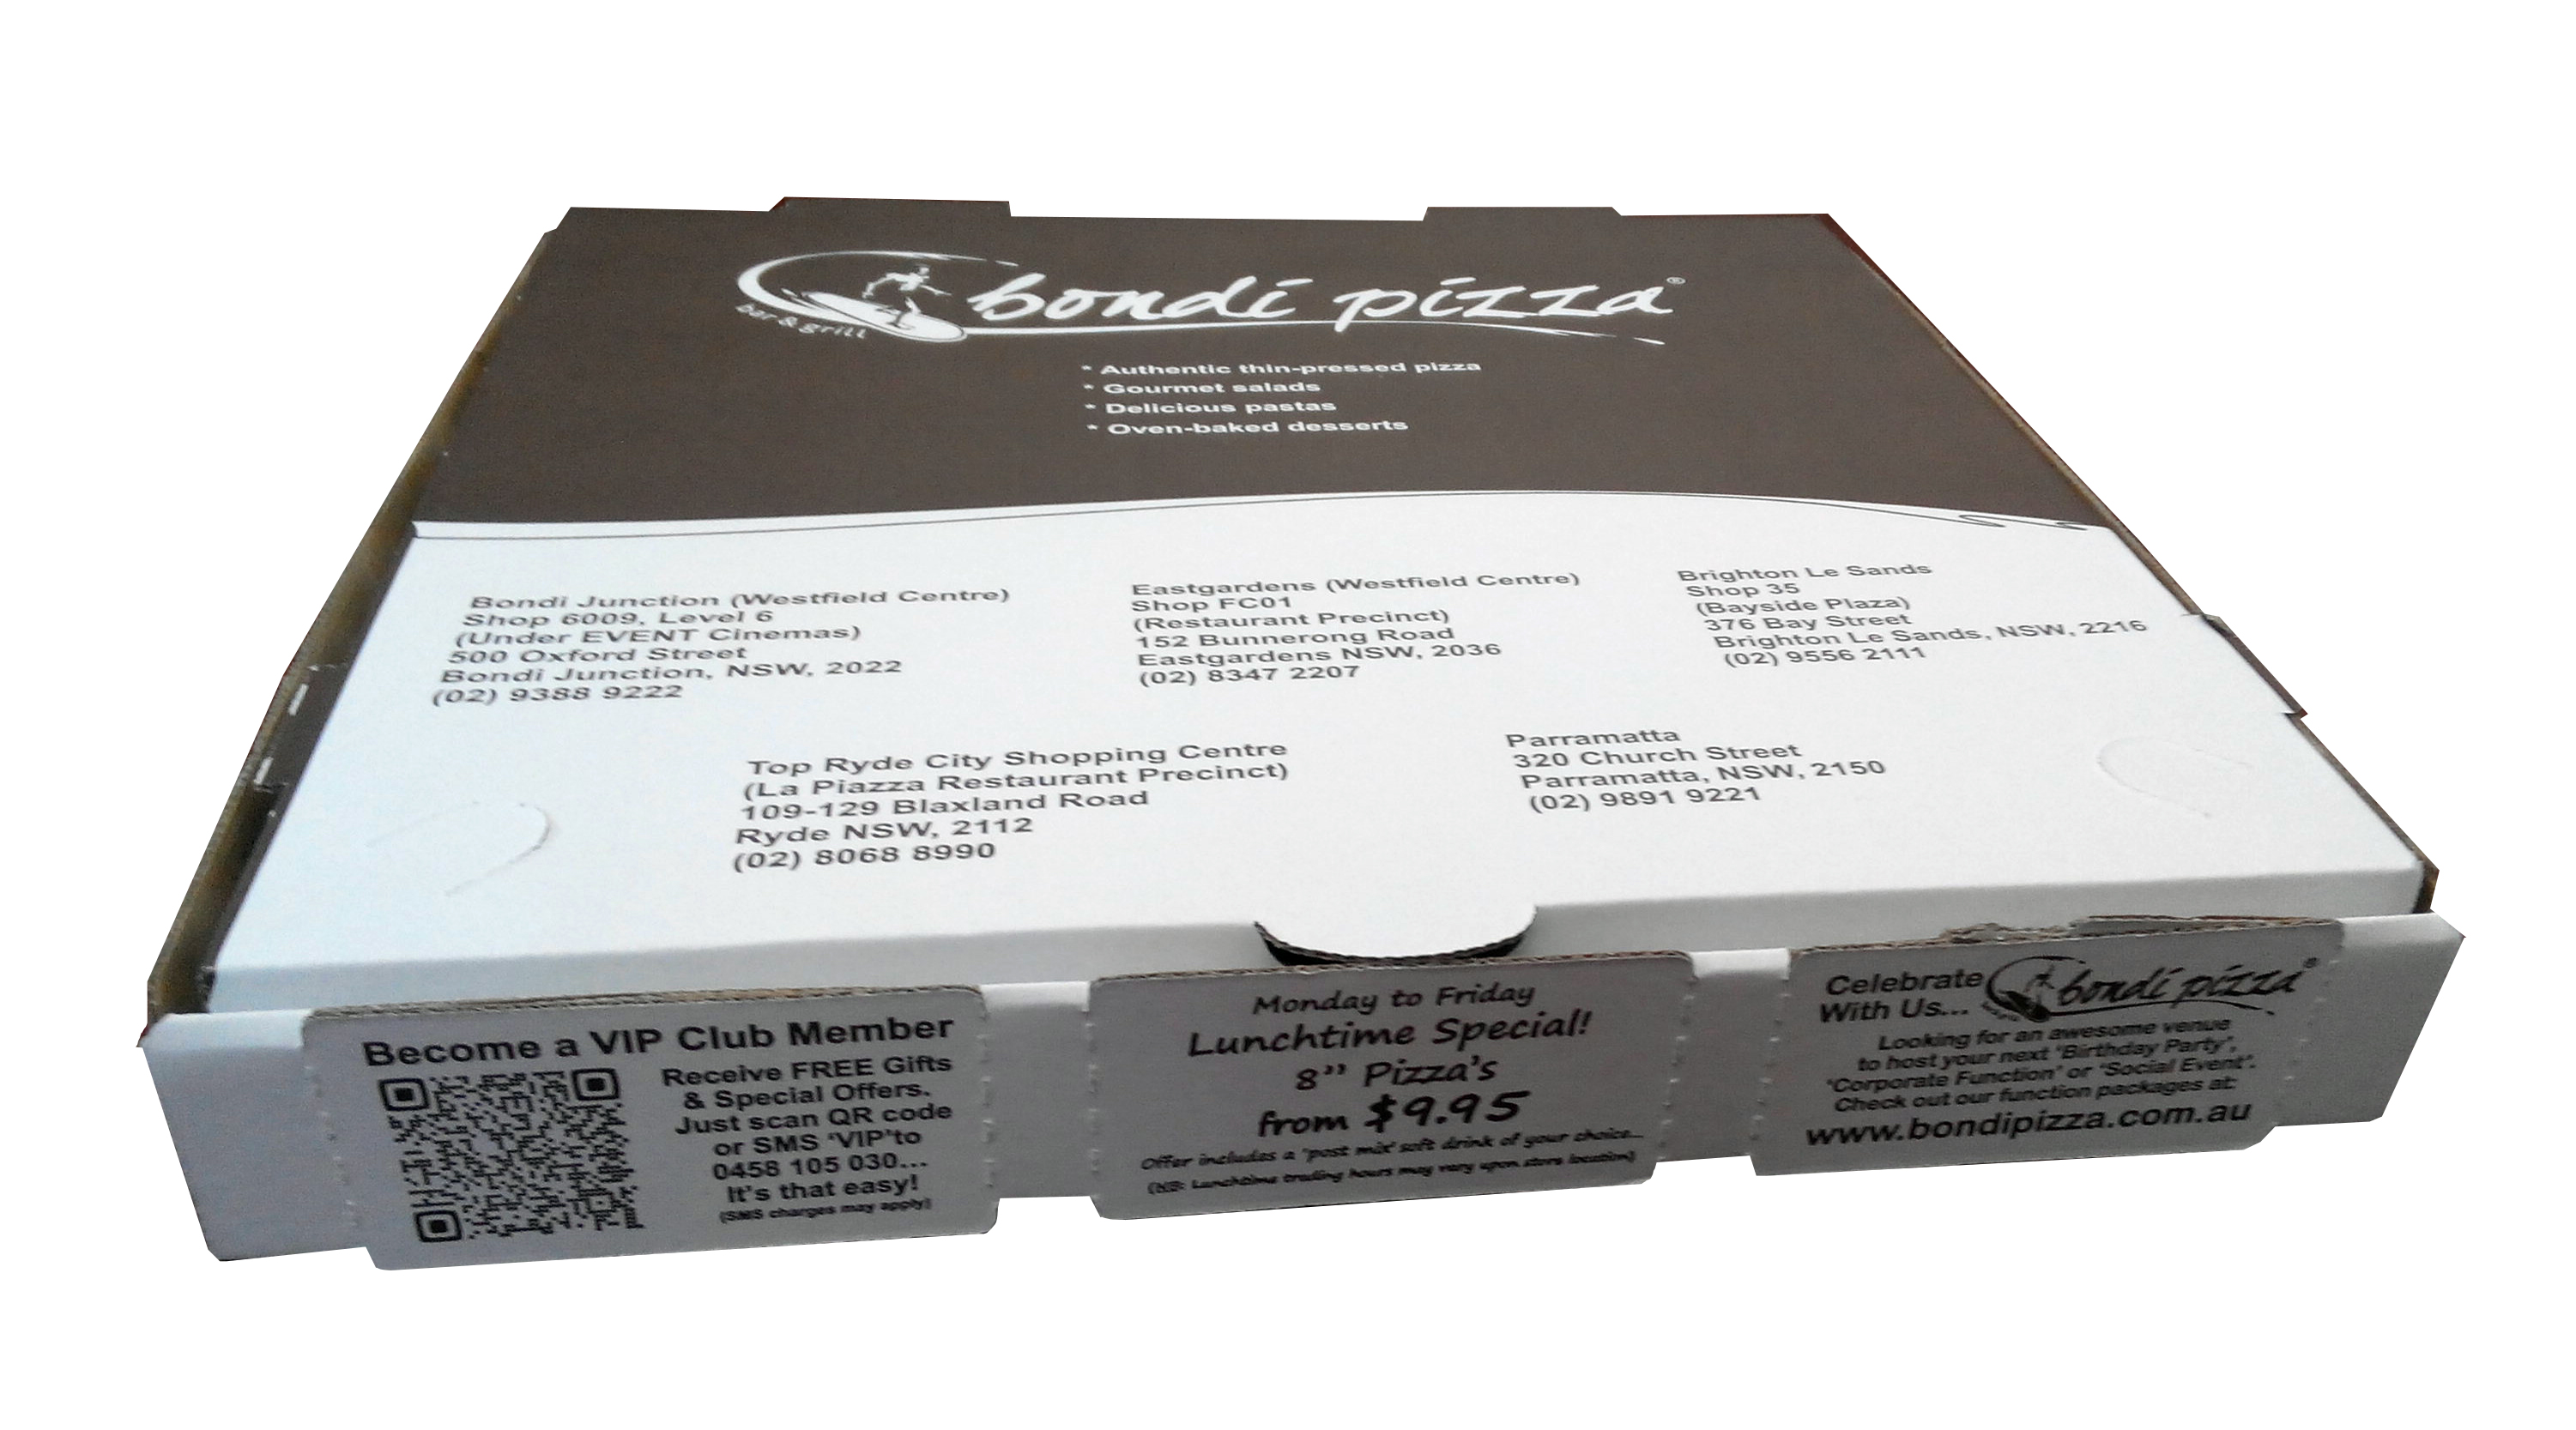 Bondi Pizza 13 inch pizza box